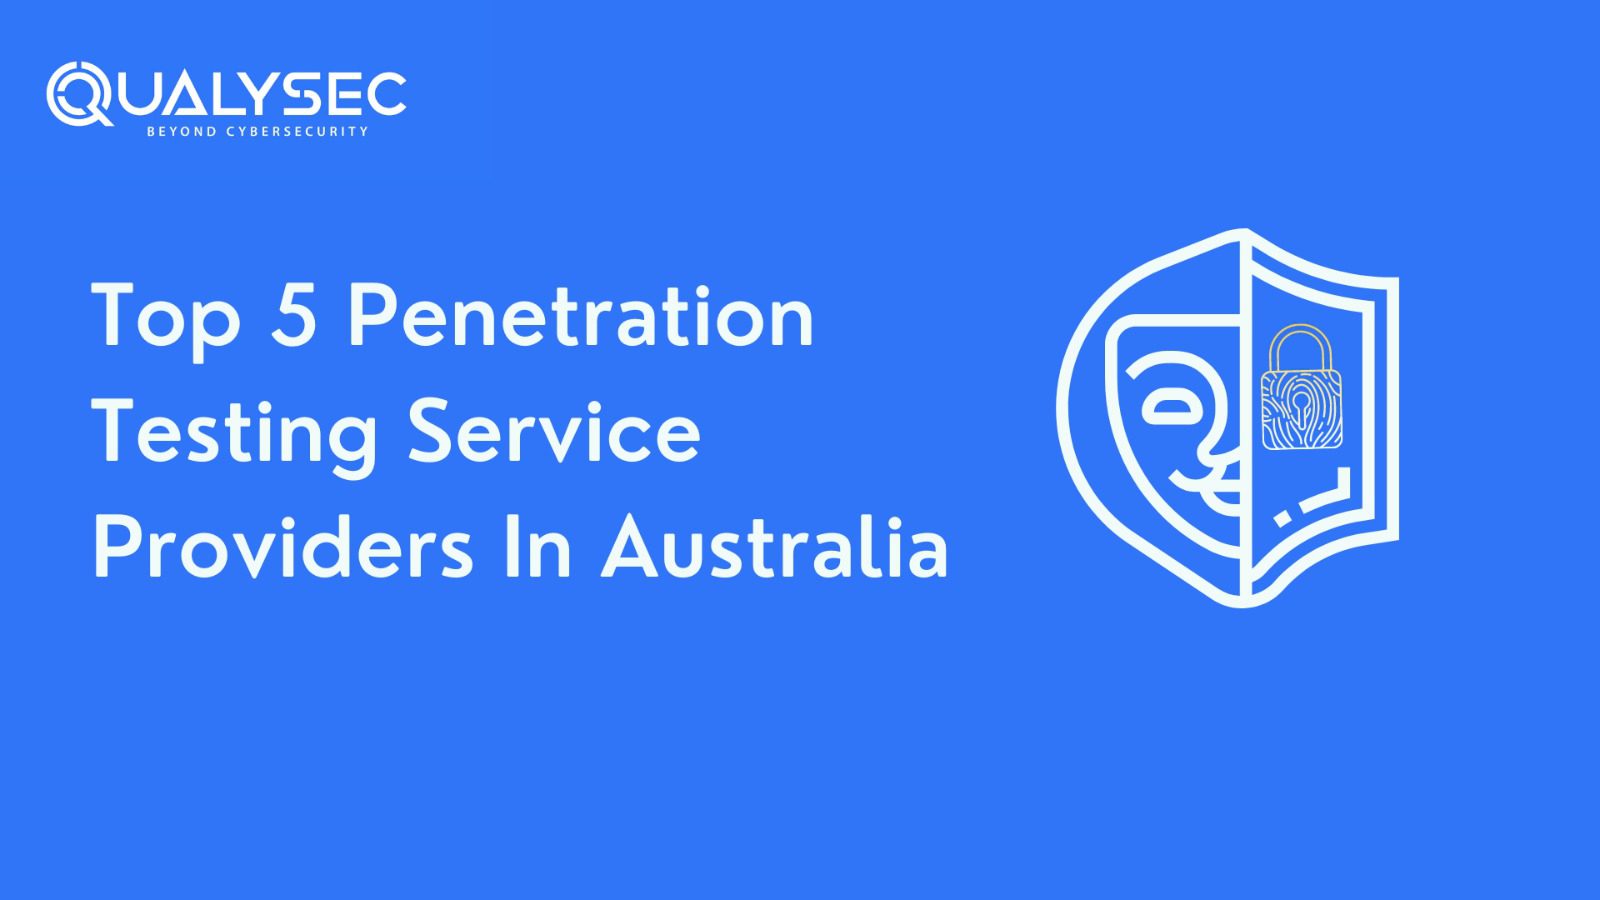 Top 5 Penetration Testing Service Providers in Australia